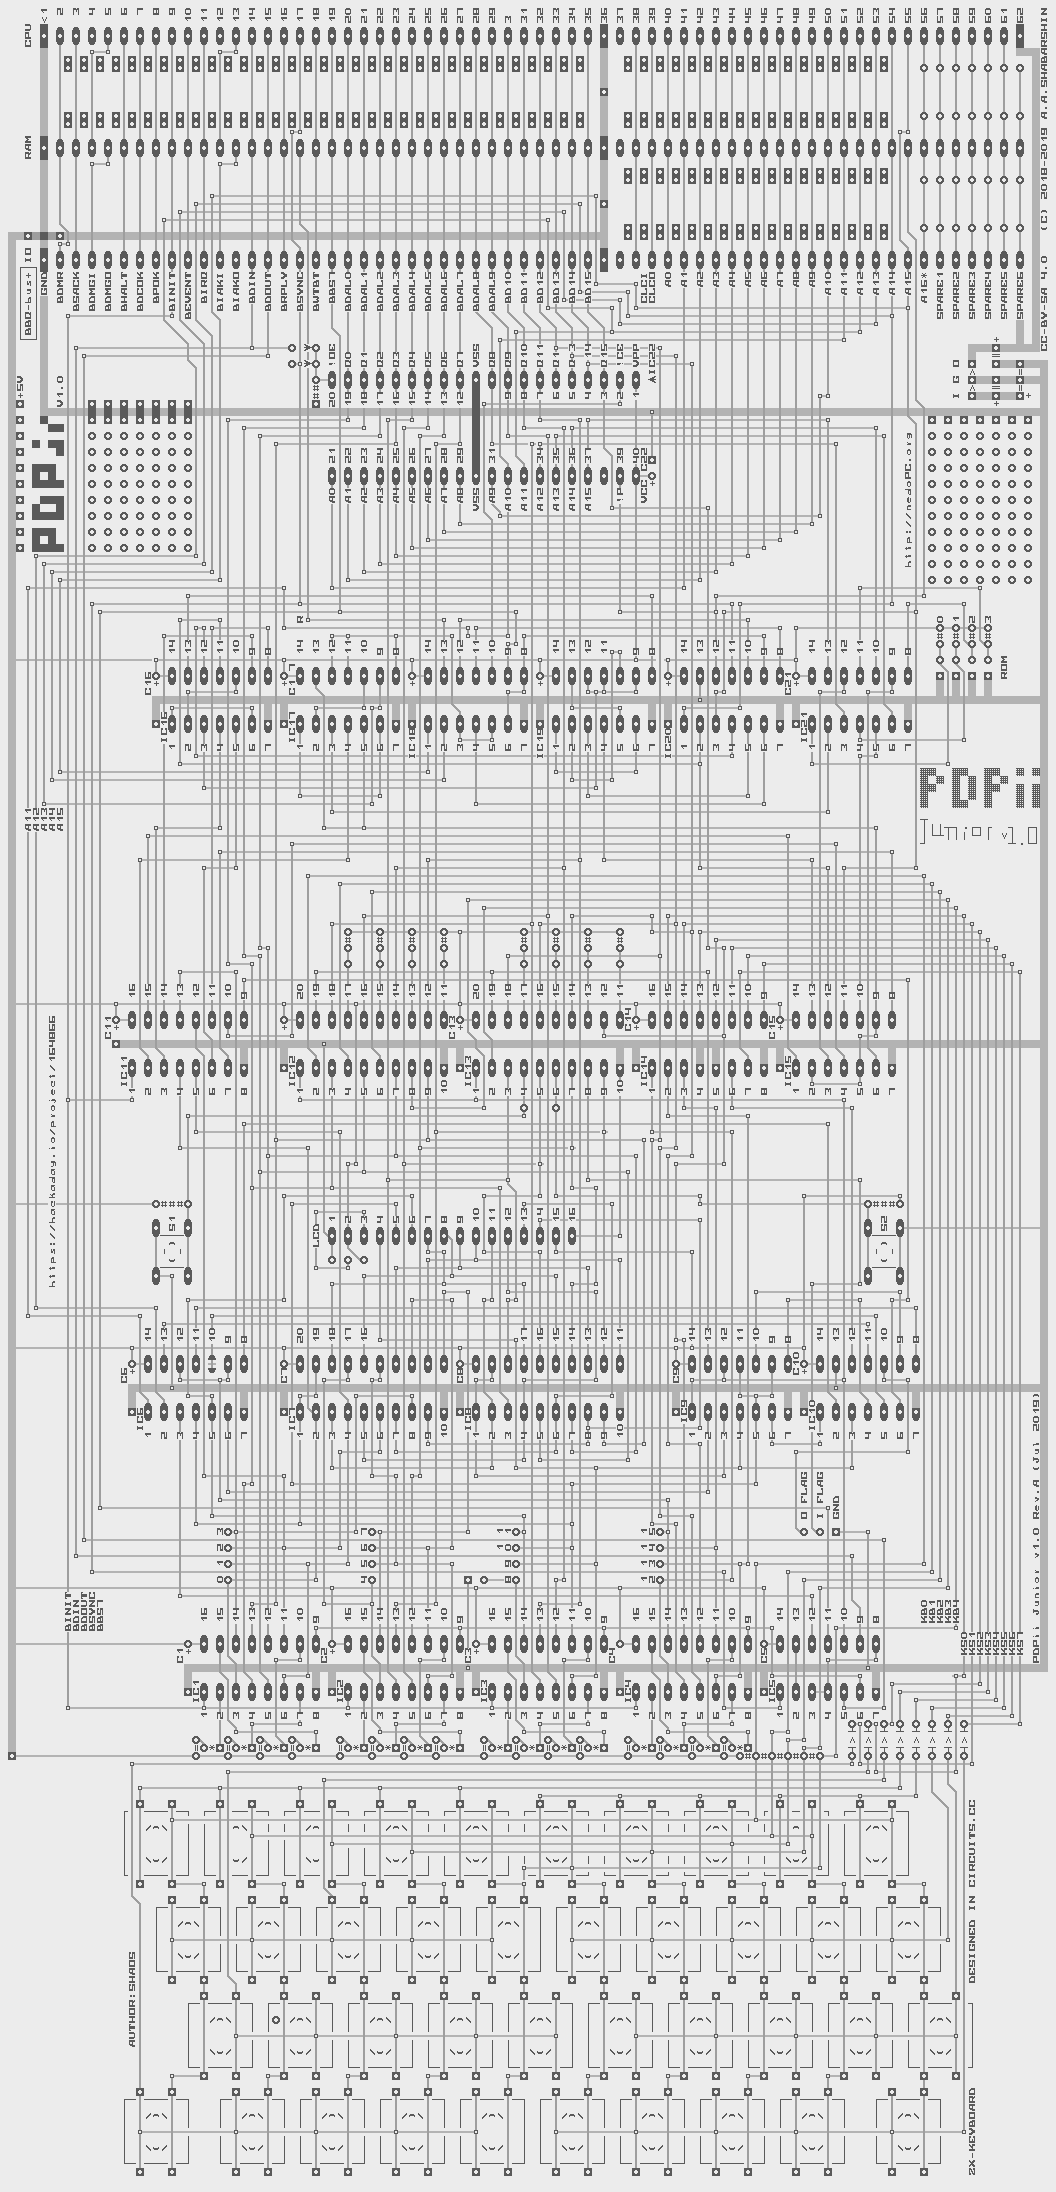 PDPjrBoard-2019-07-13.png